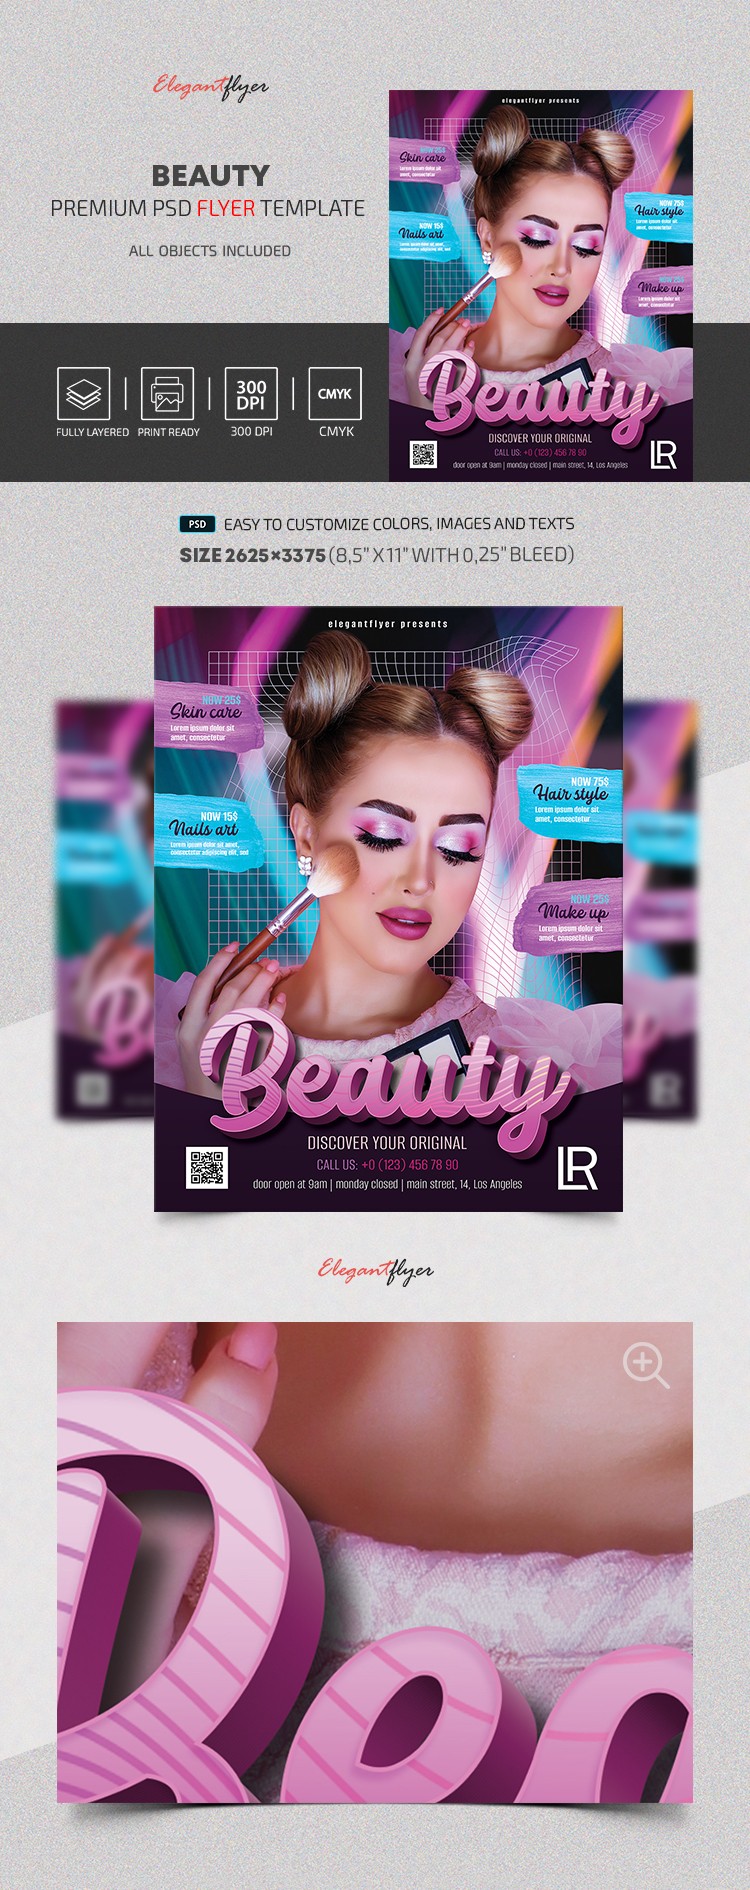 Beauty Flyer by ElegantFlyer